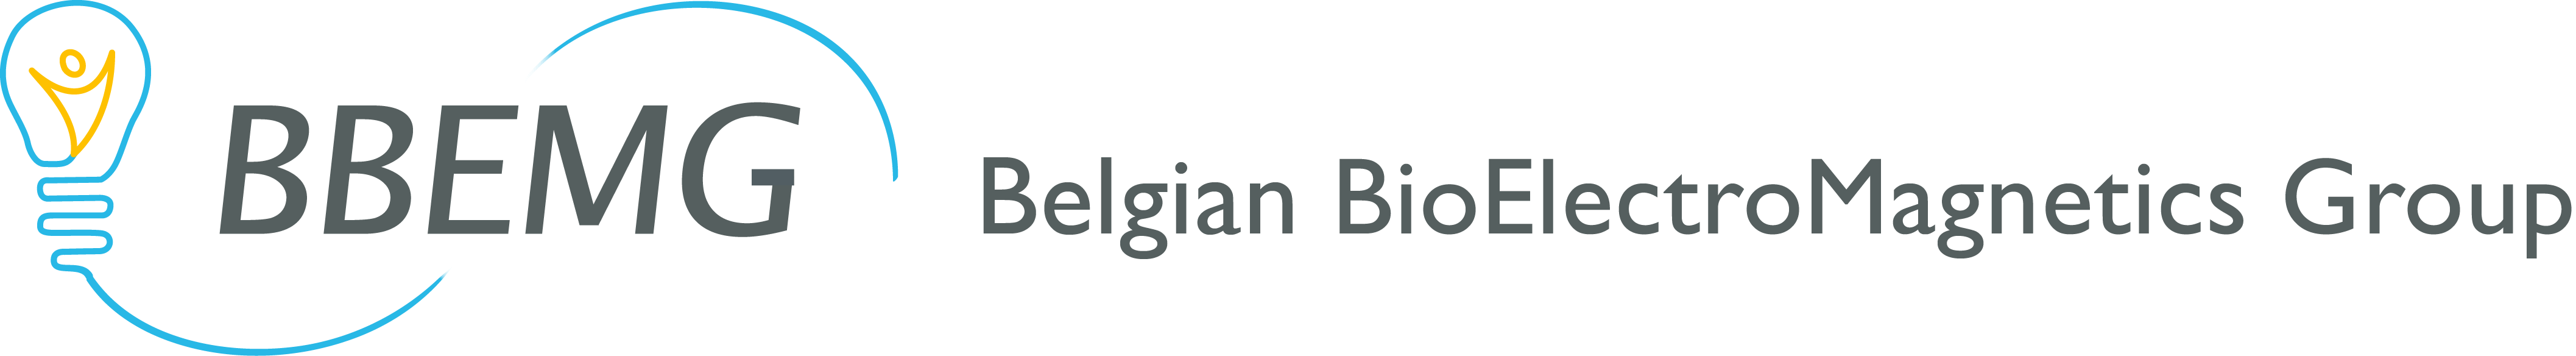 BBEMG - Belgian BioElectroMagnetics Group